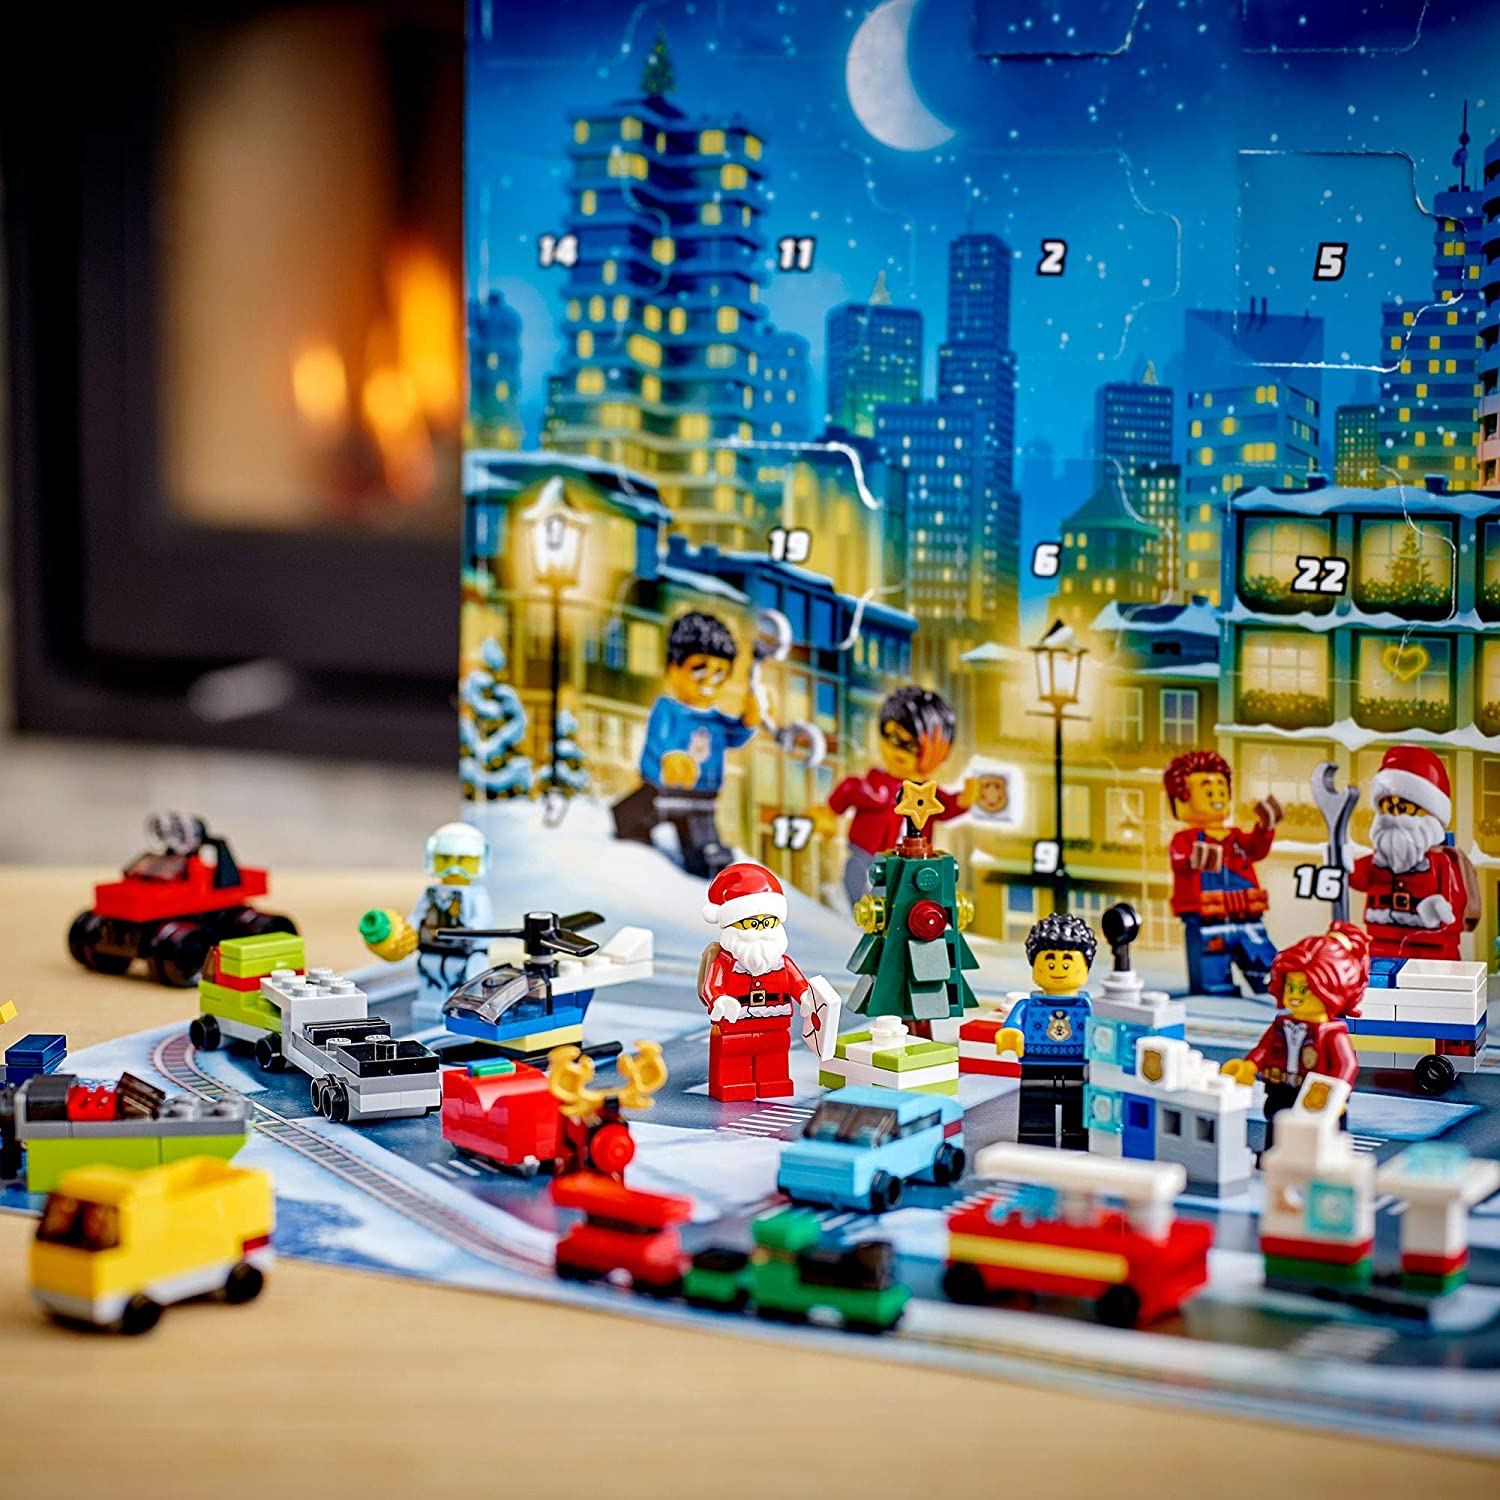 Lego City calendario dell'avvento 2020